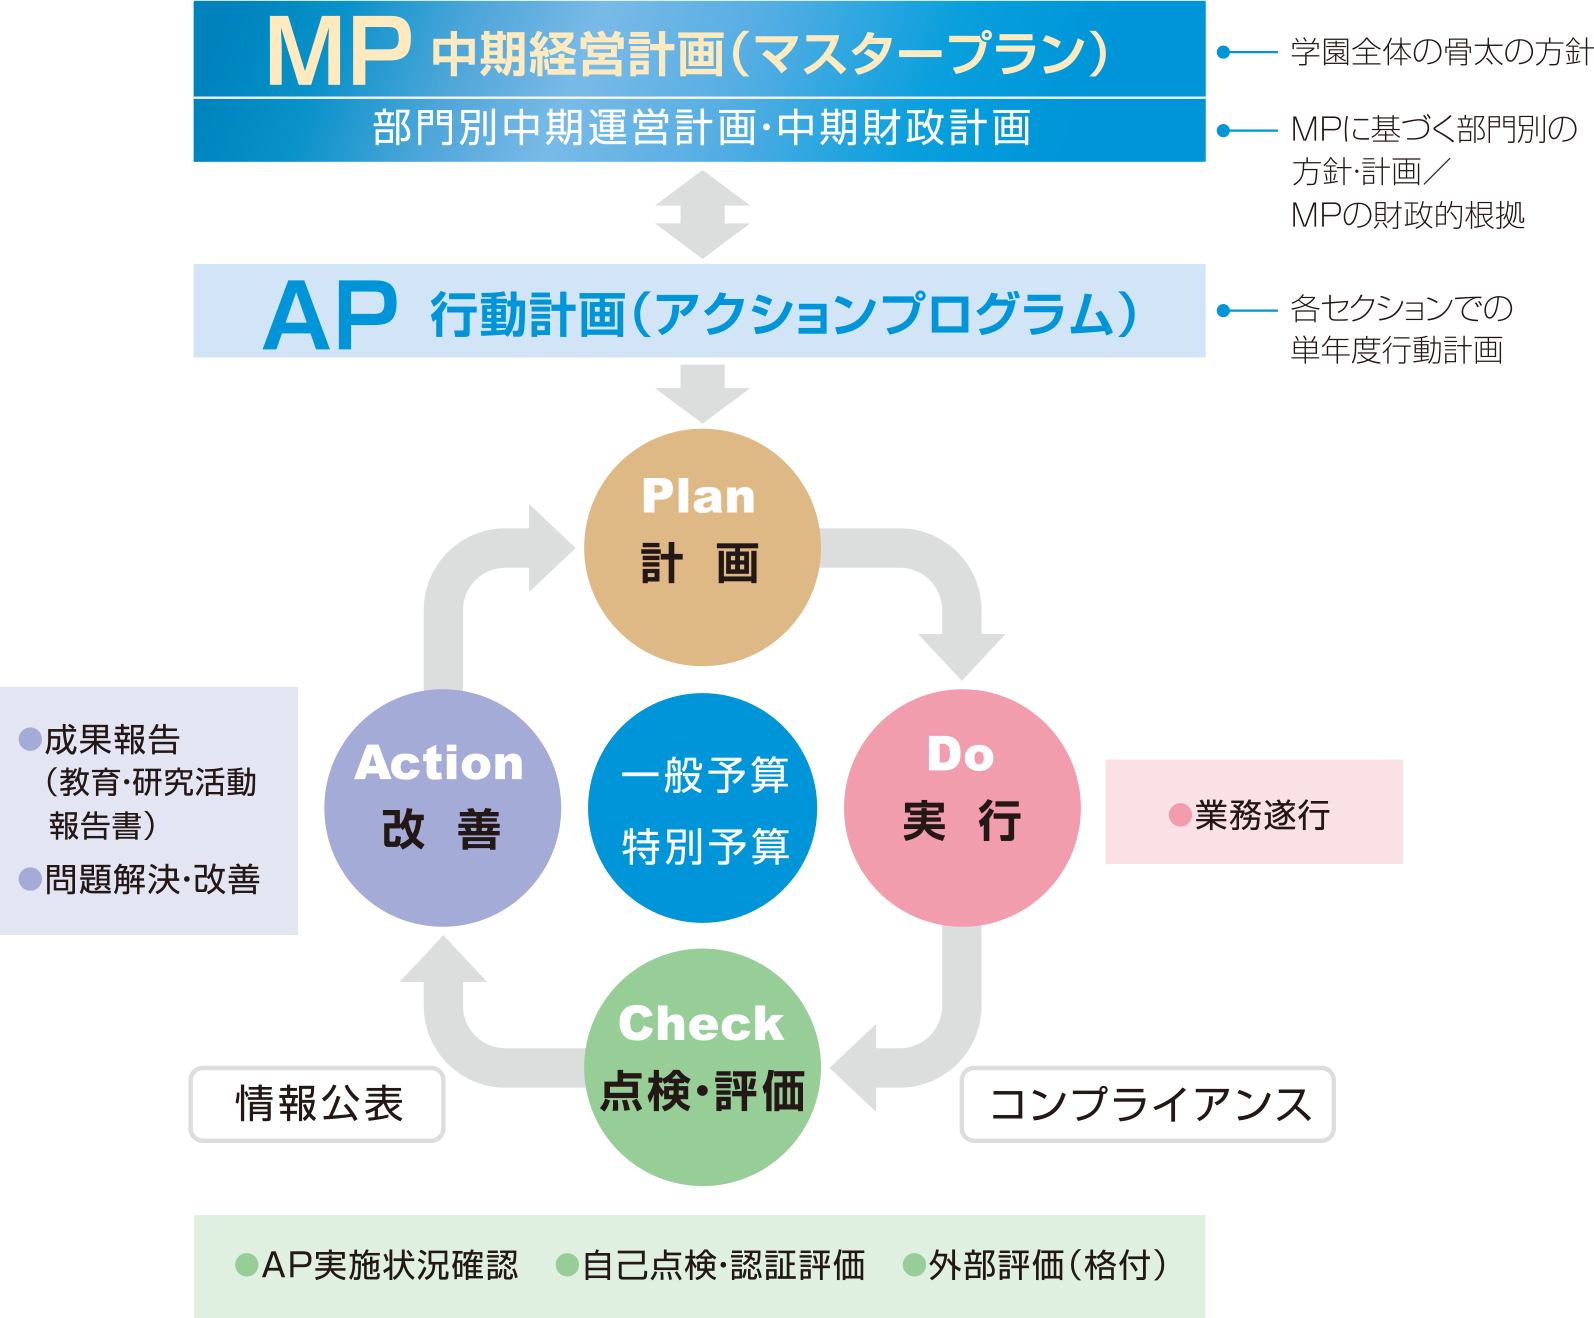 MP 中期経営計画（マスタープラン）組織図